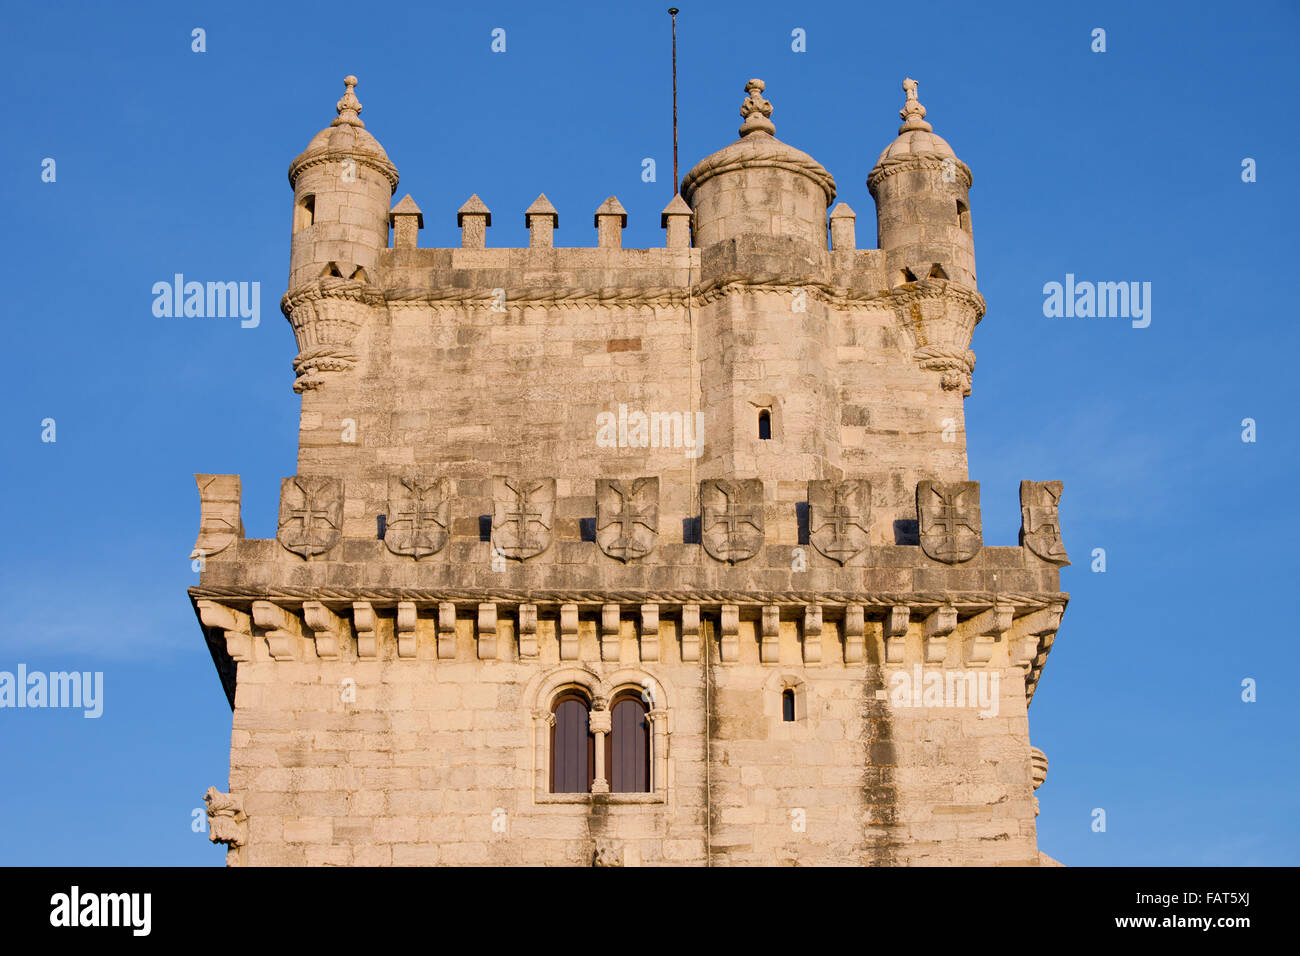 Belem Tower (Torre de Belem) fortification, battlement with bartizan turrets Stock Photo